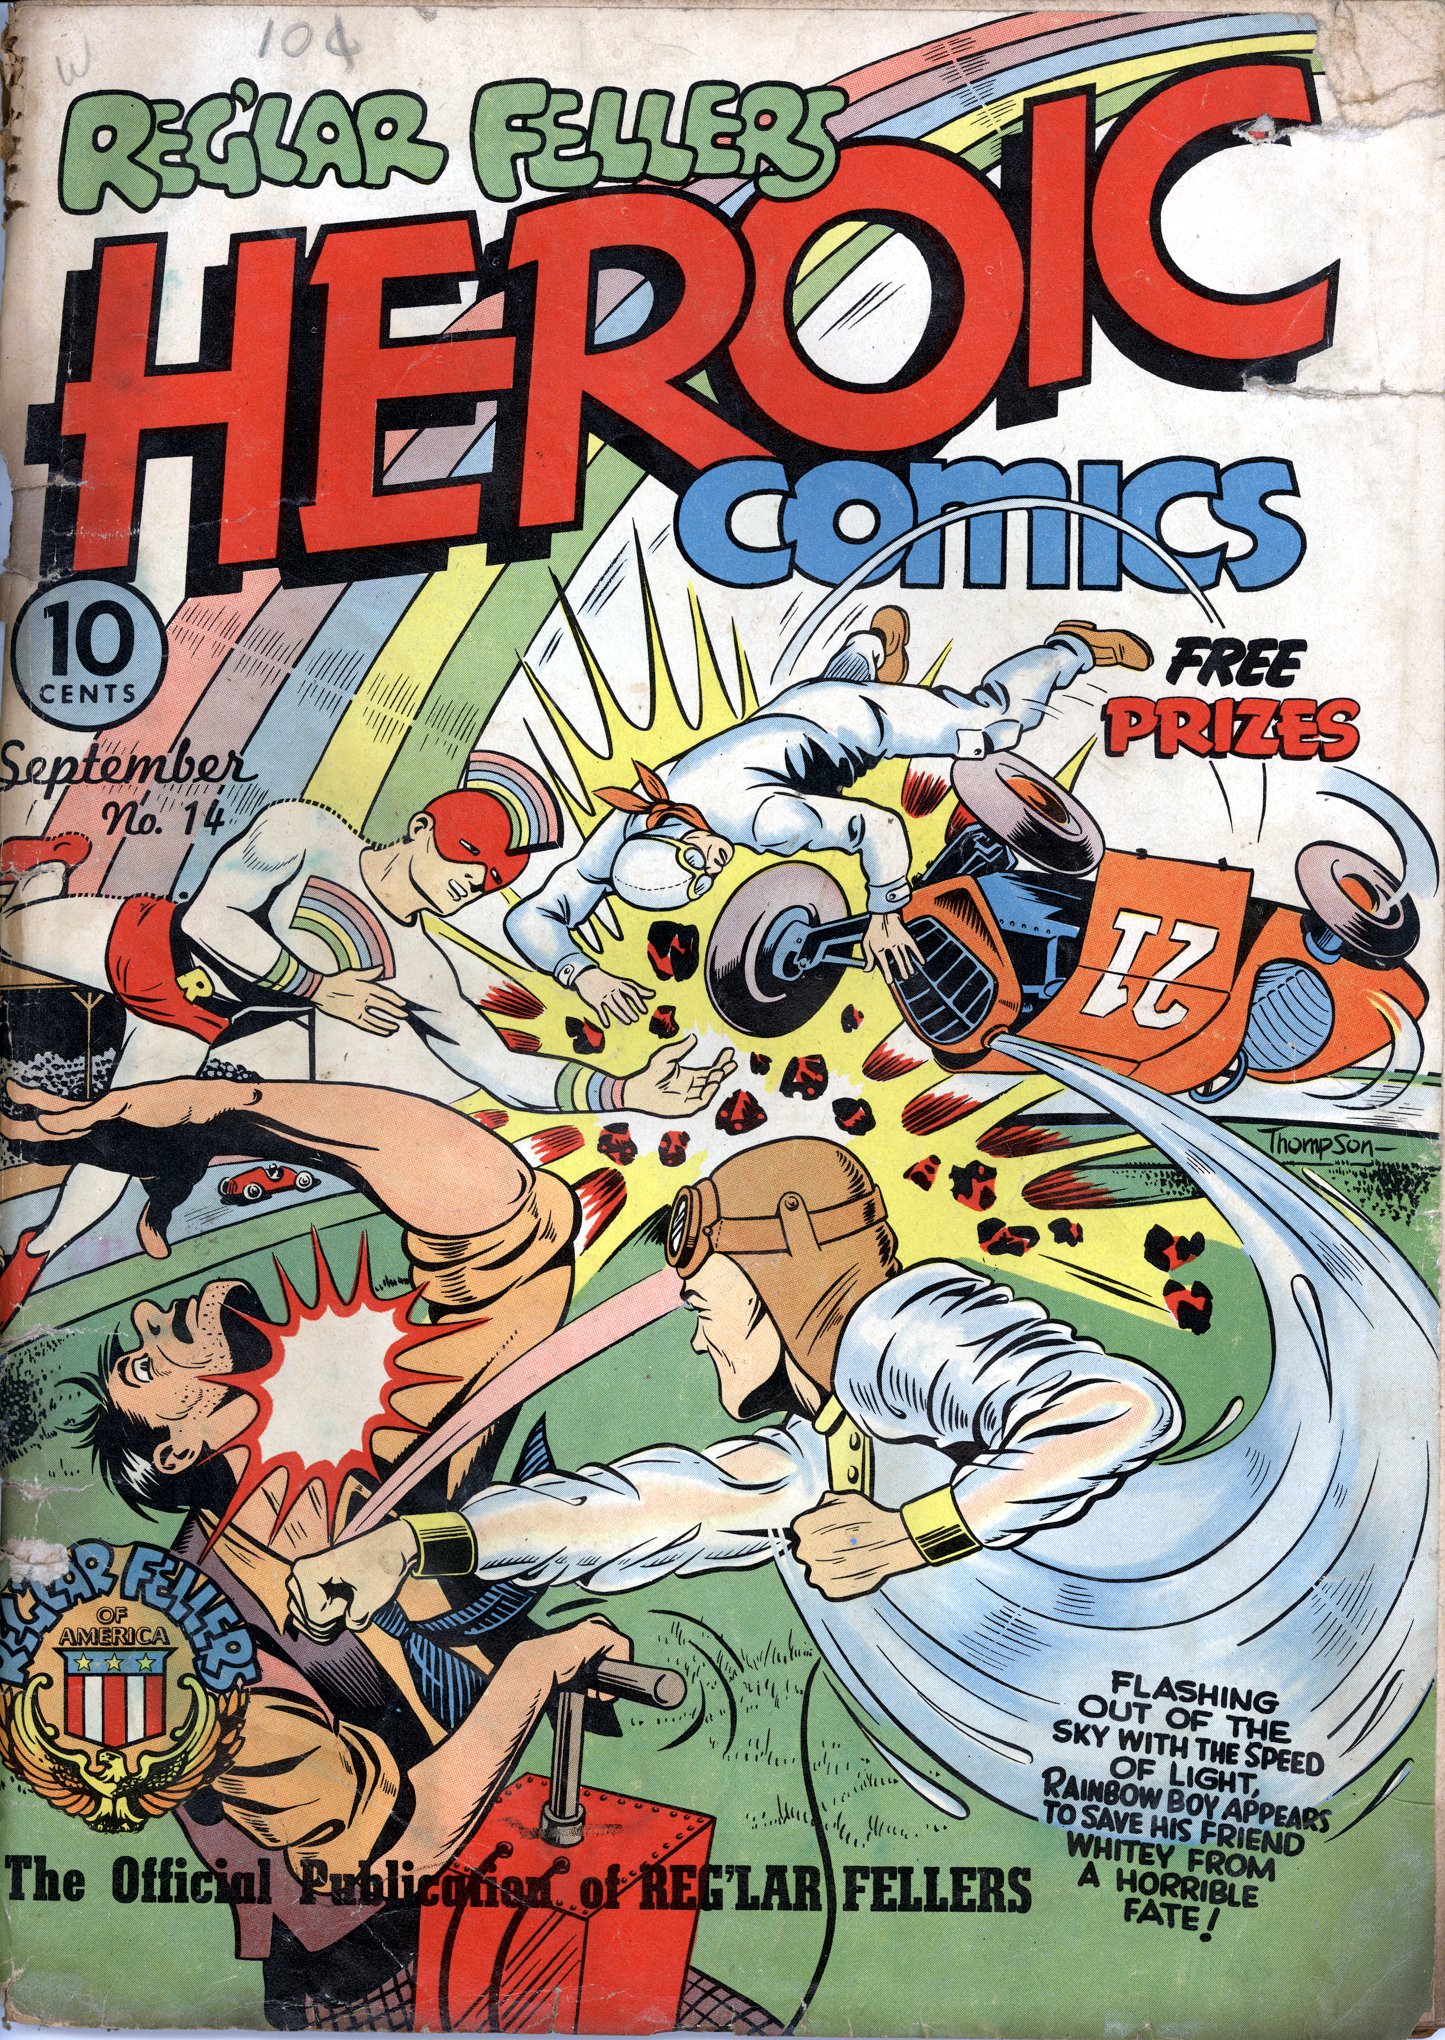 Reg'lar Fellers Heroic Comics issue 14 - Page 1